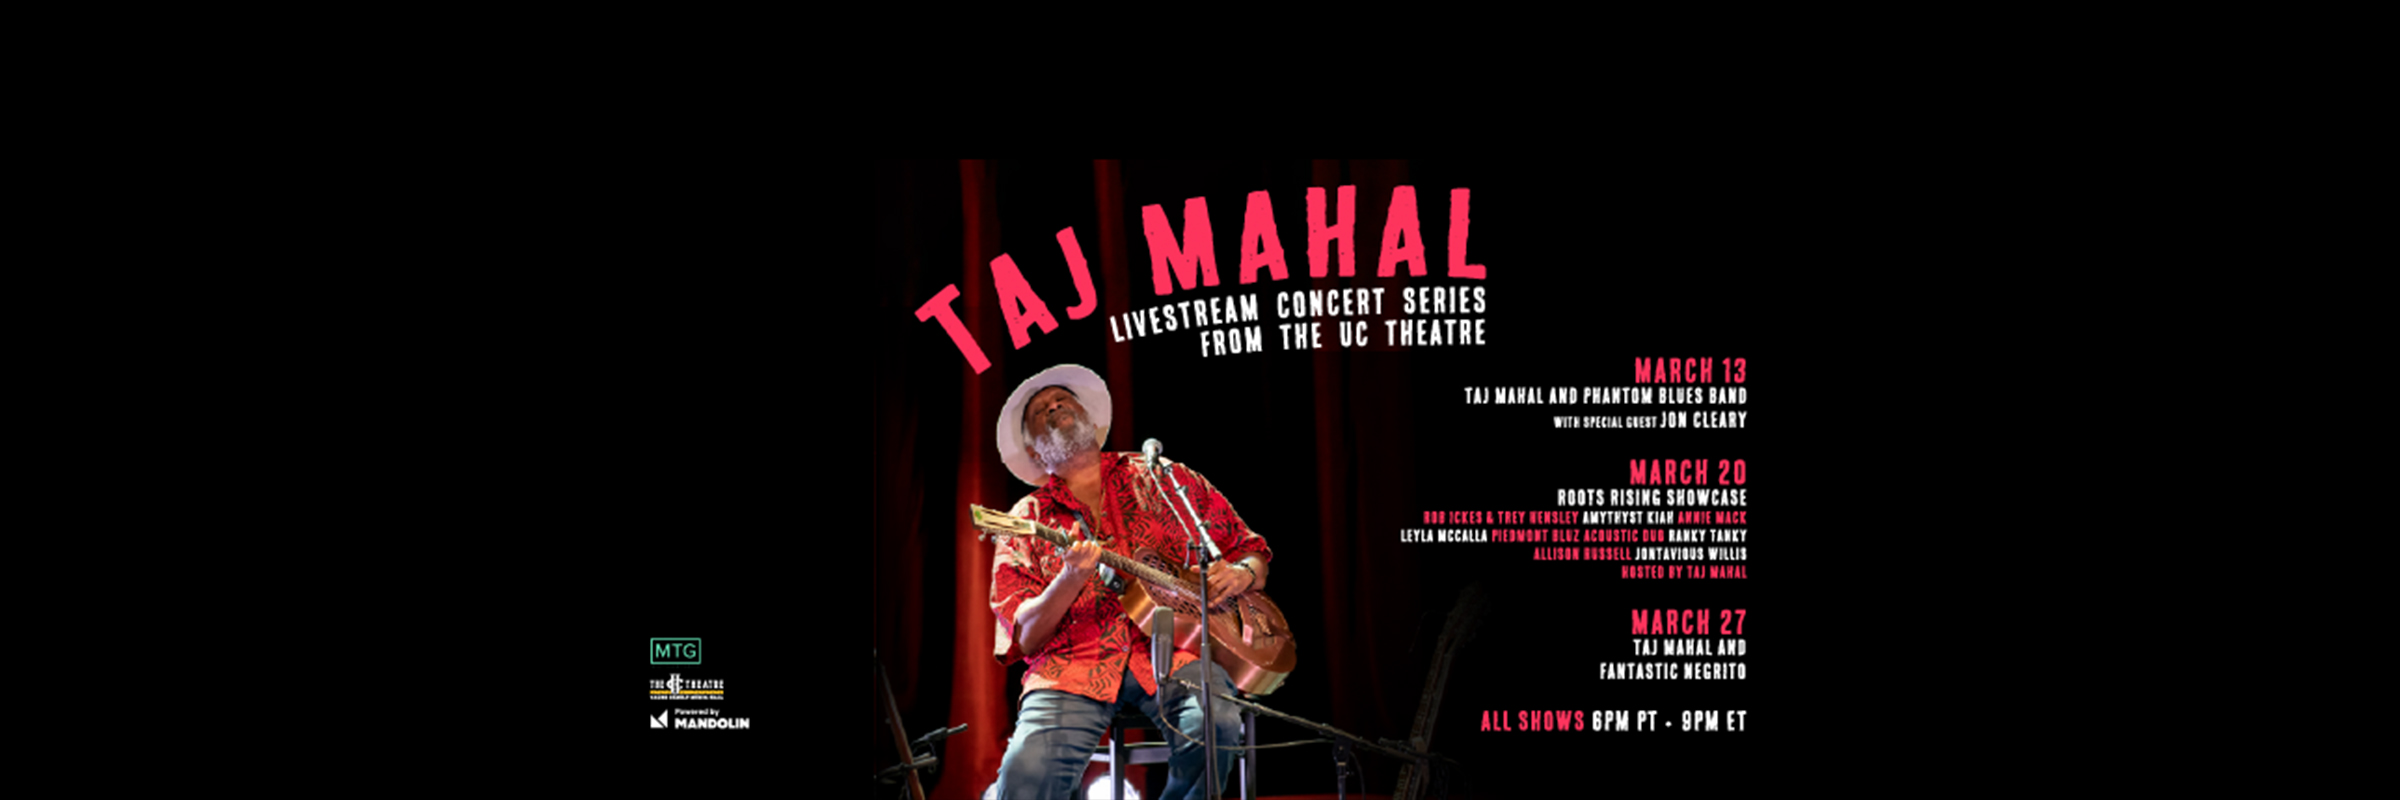 Taj Mahal Livestream Series